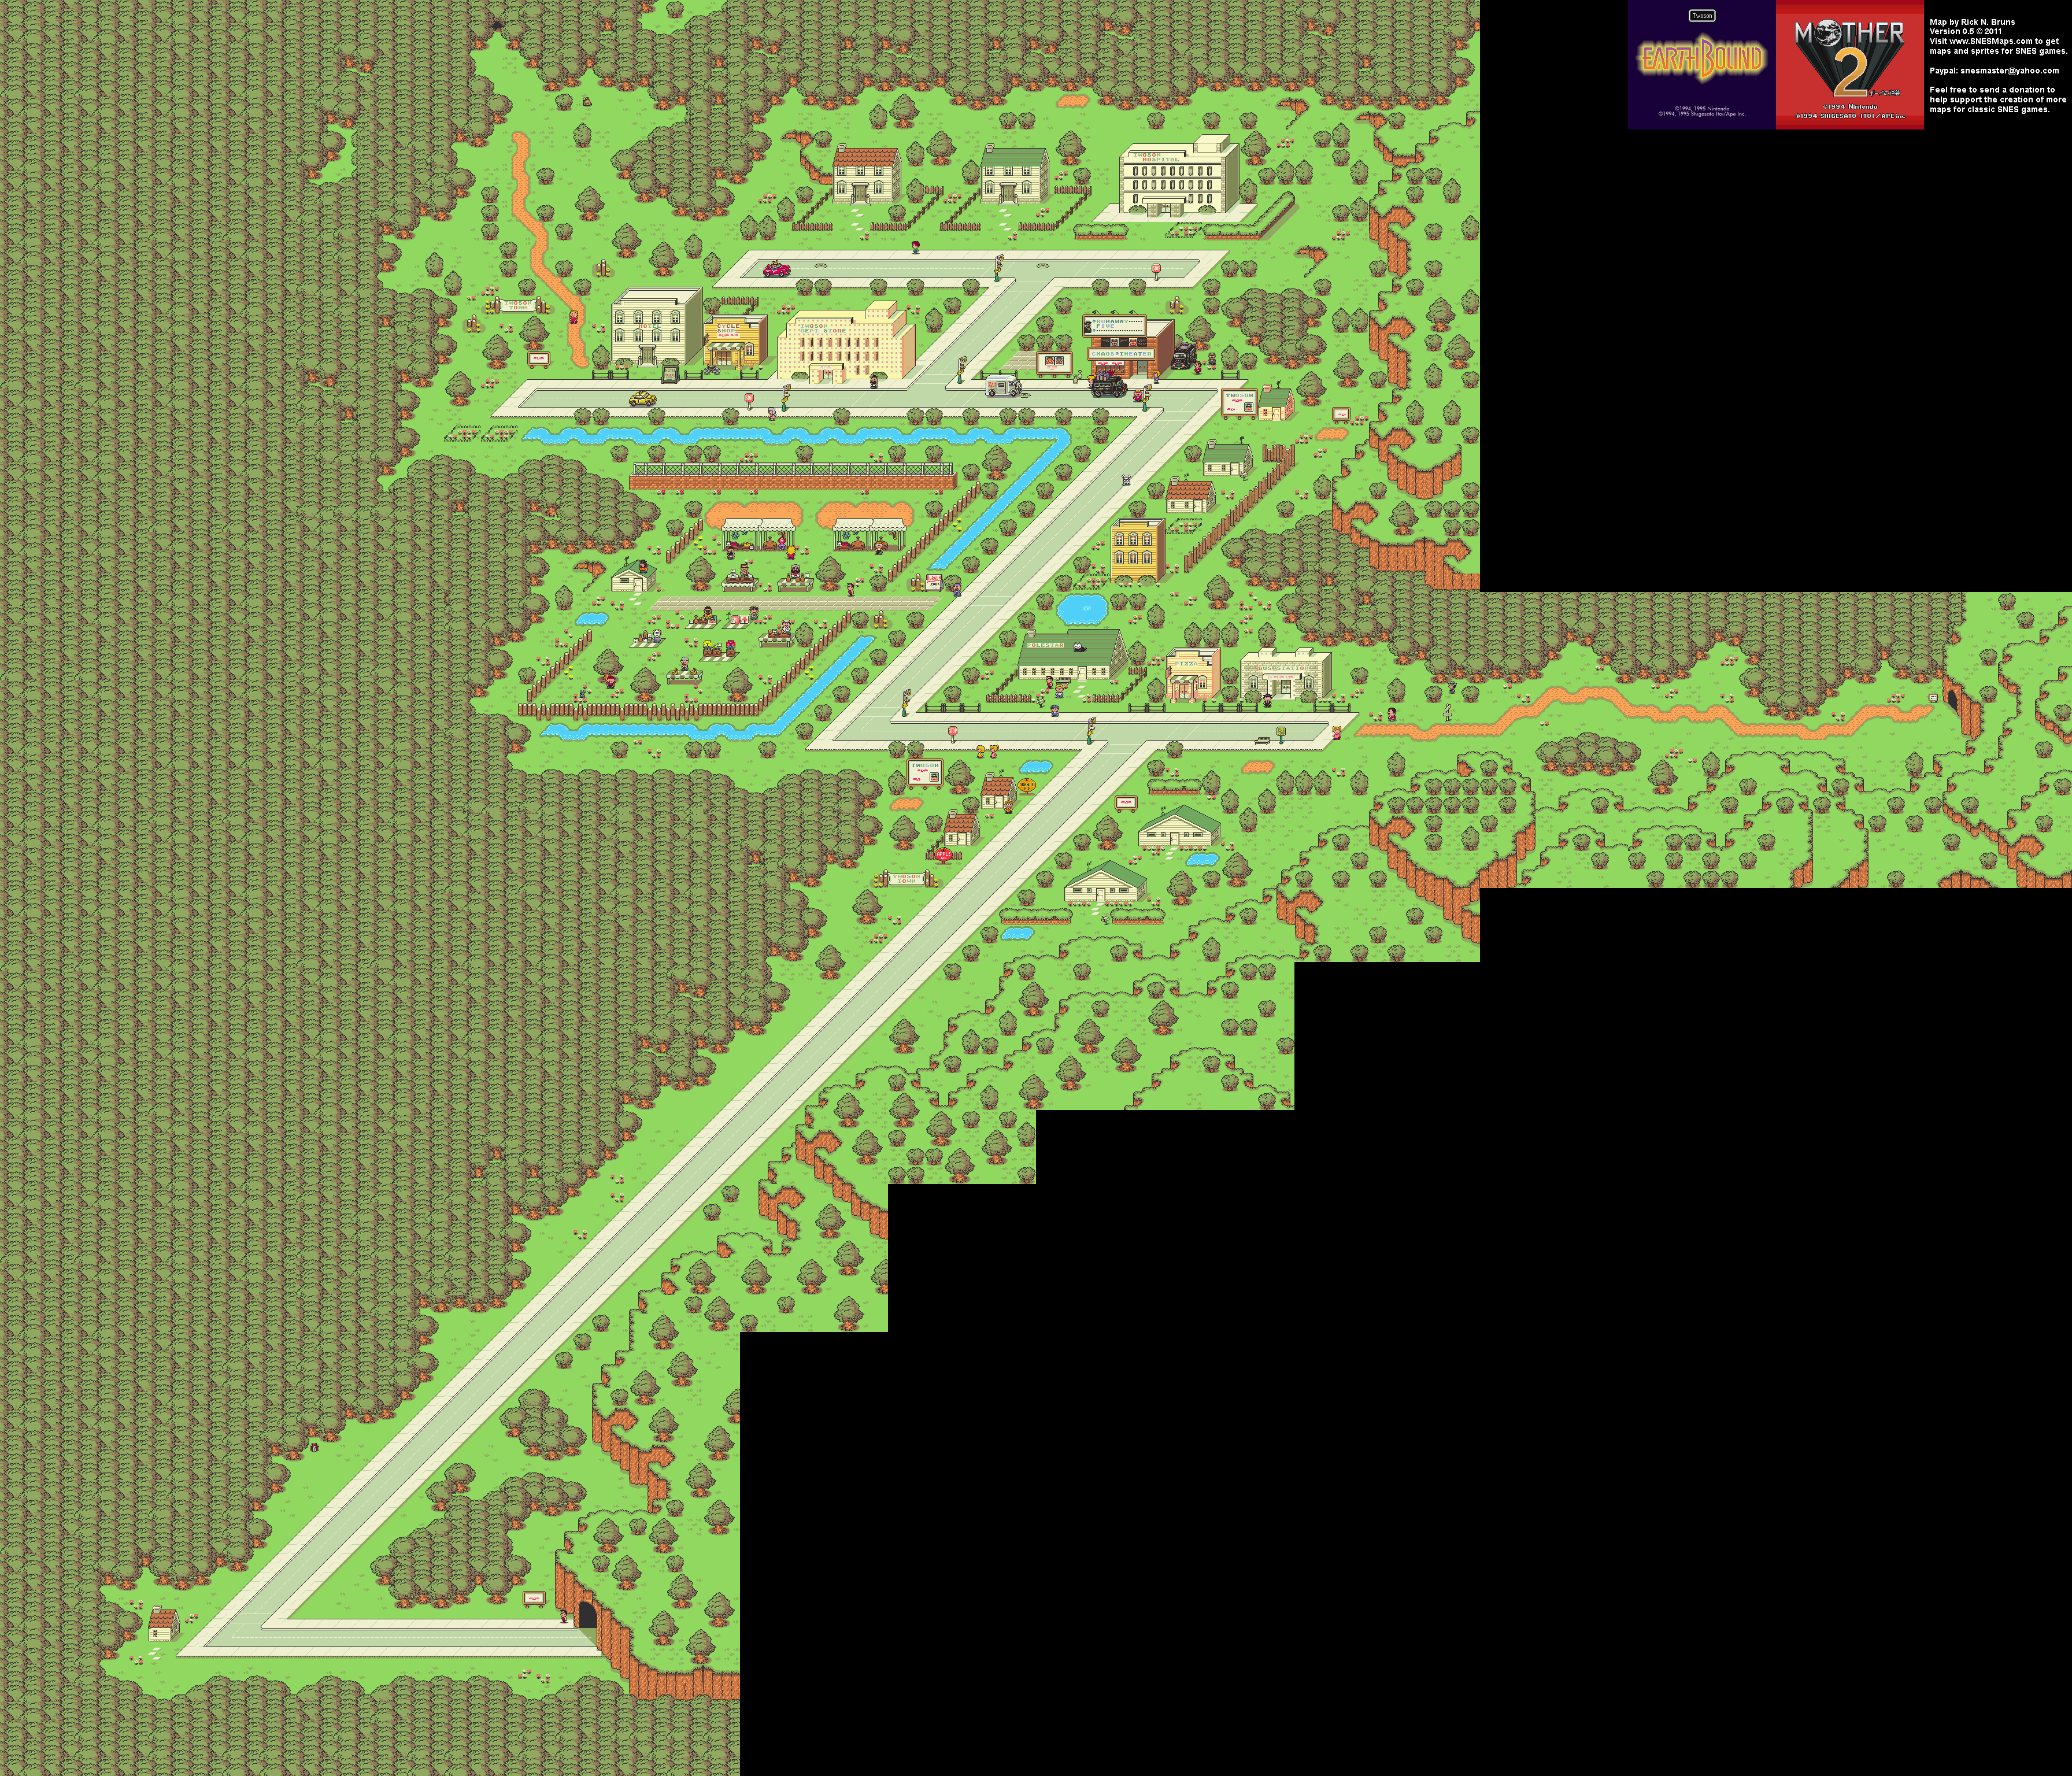 EarthBound (Mother 2) - Twoson Super Nintendo SNES Map